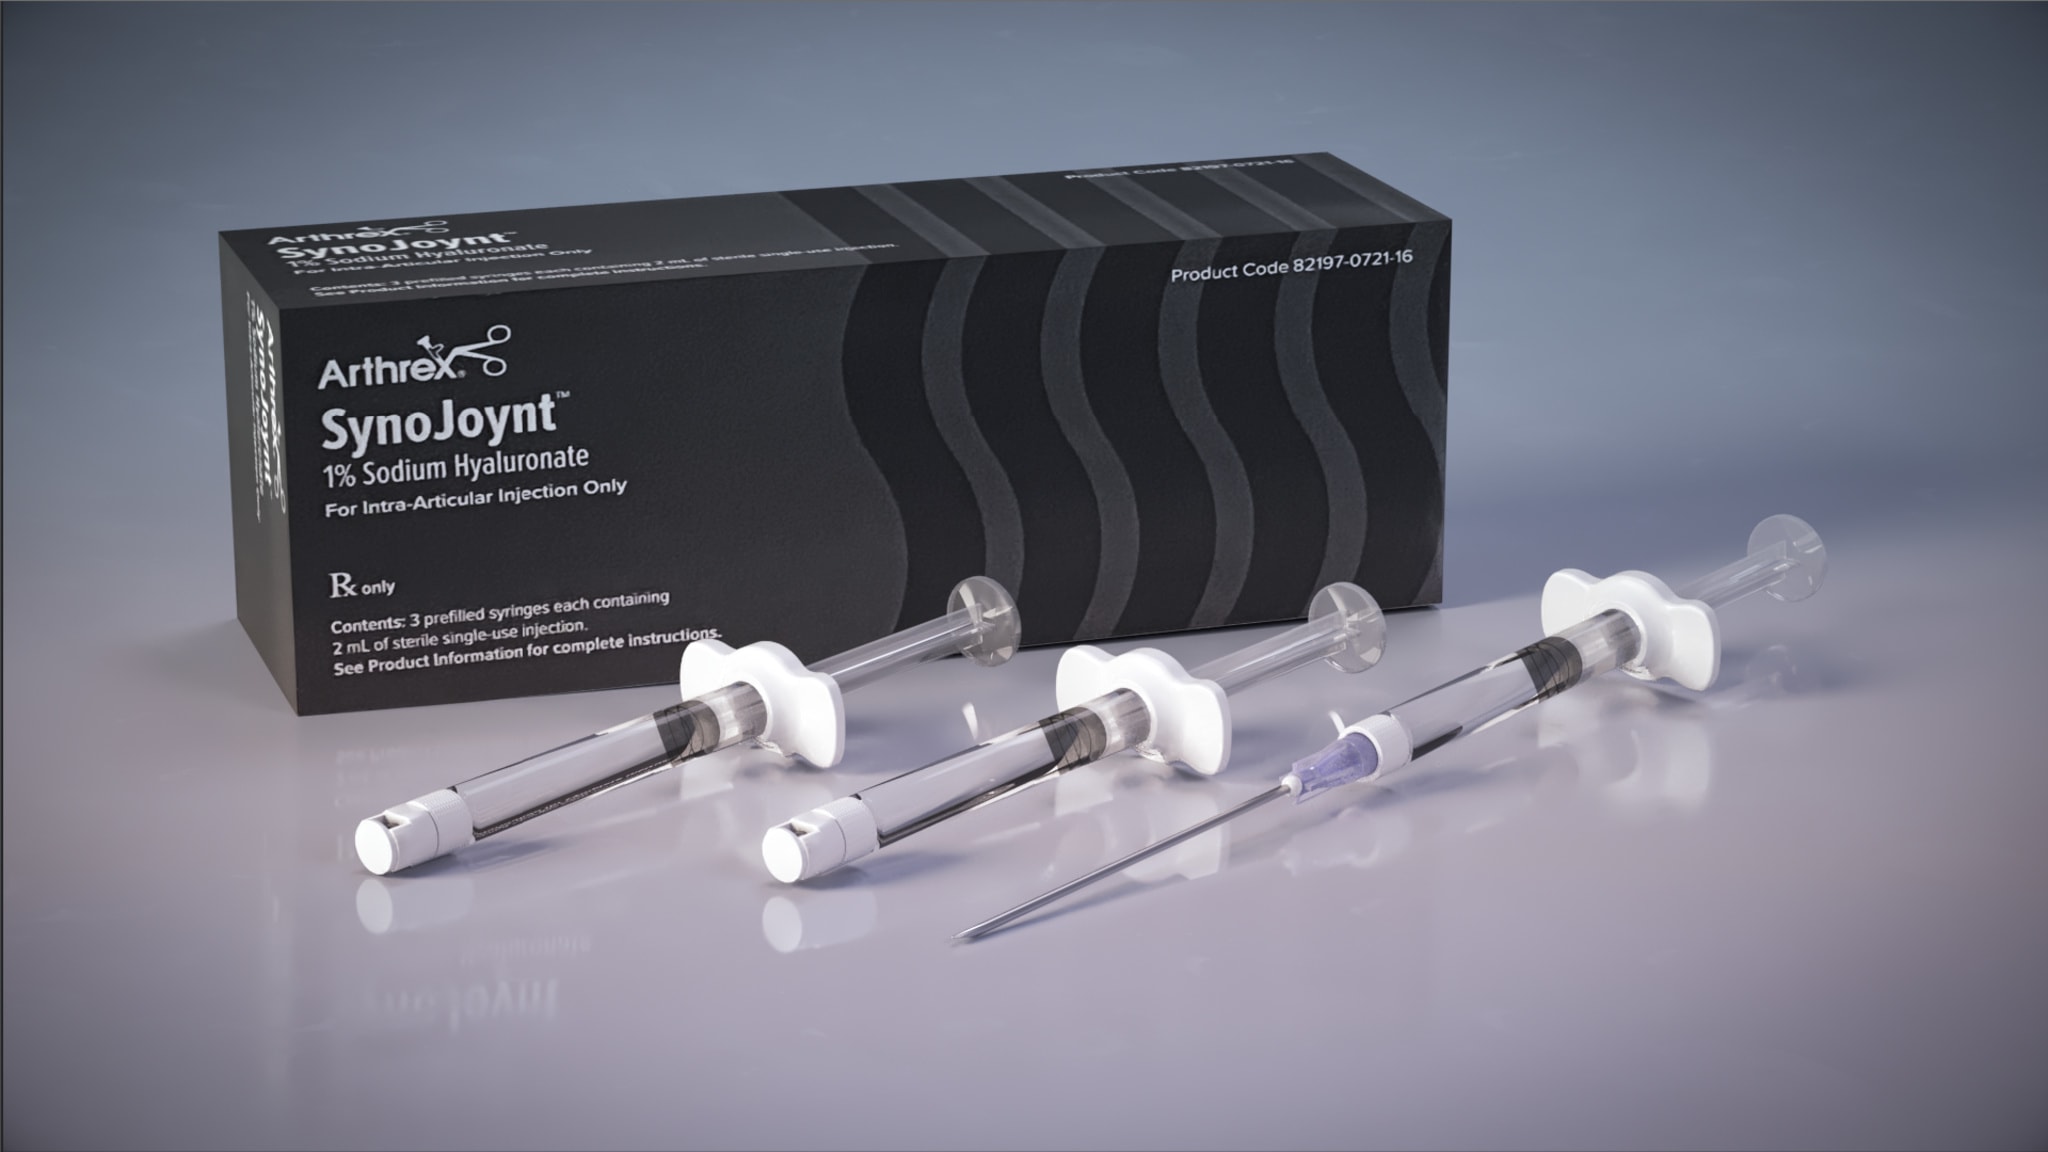 SynoJoynt™ 1% Sodium Hyaluronate